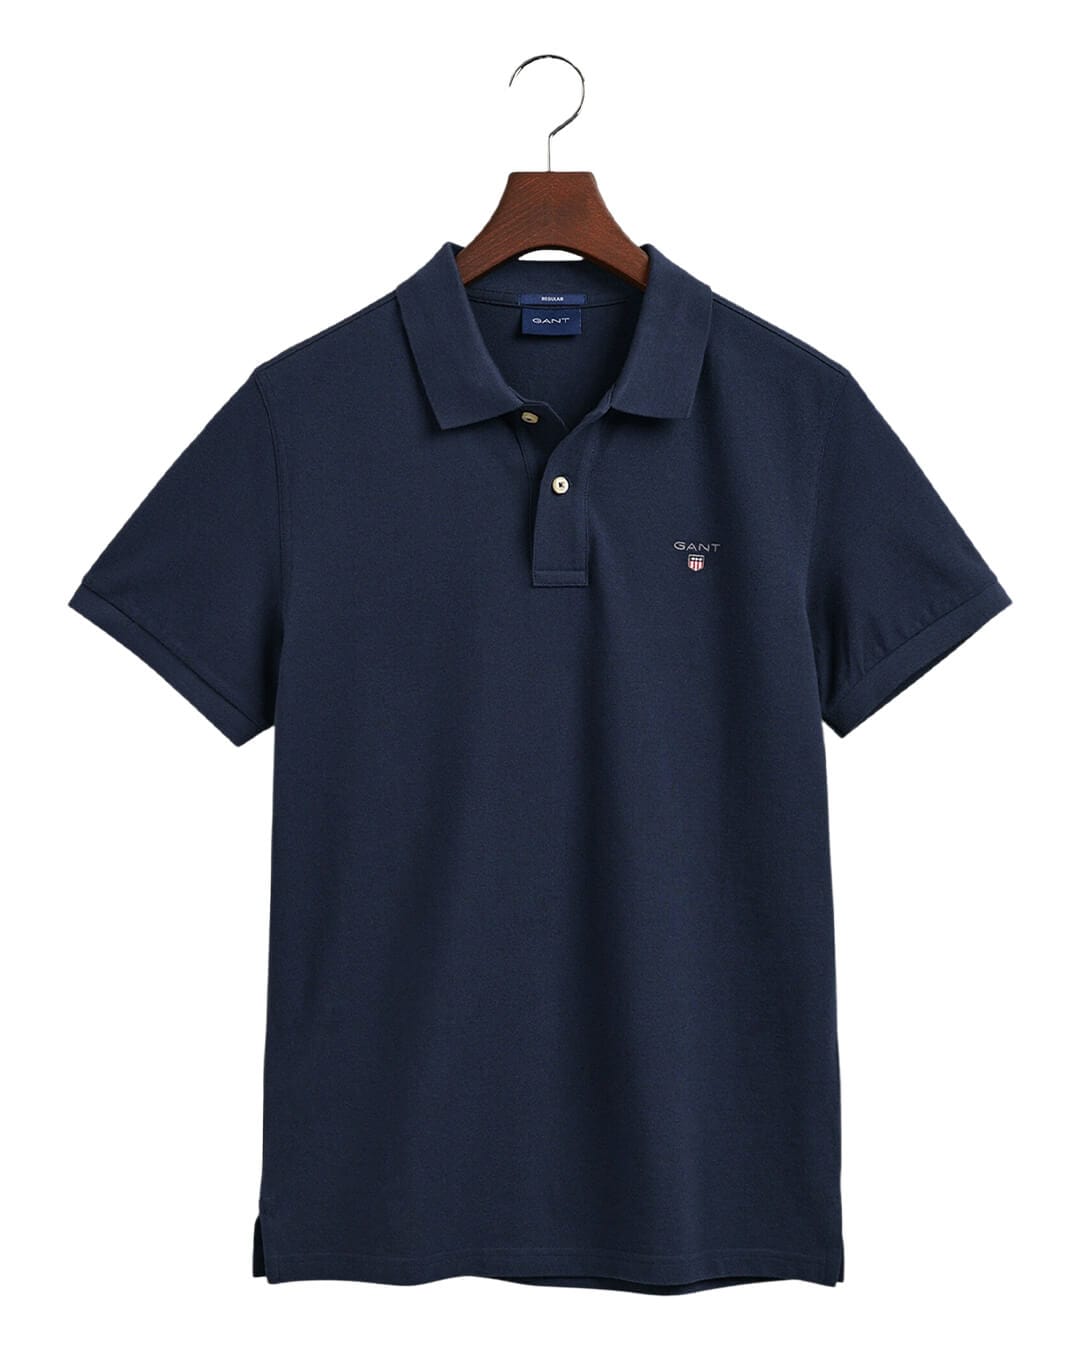 Gant Polo Shirts Gant Original Pique Navy Polo Shirt